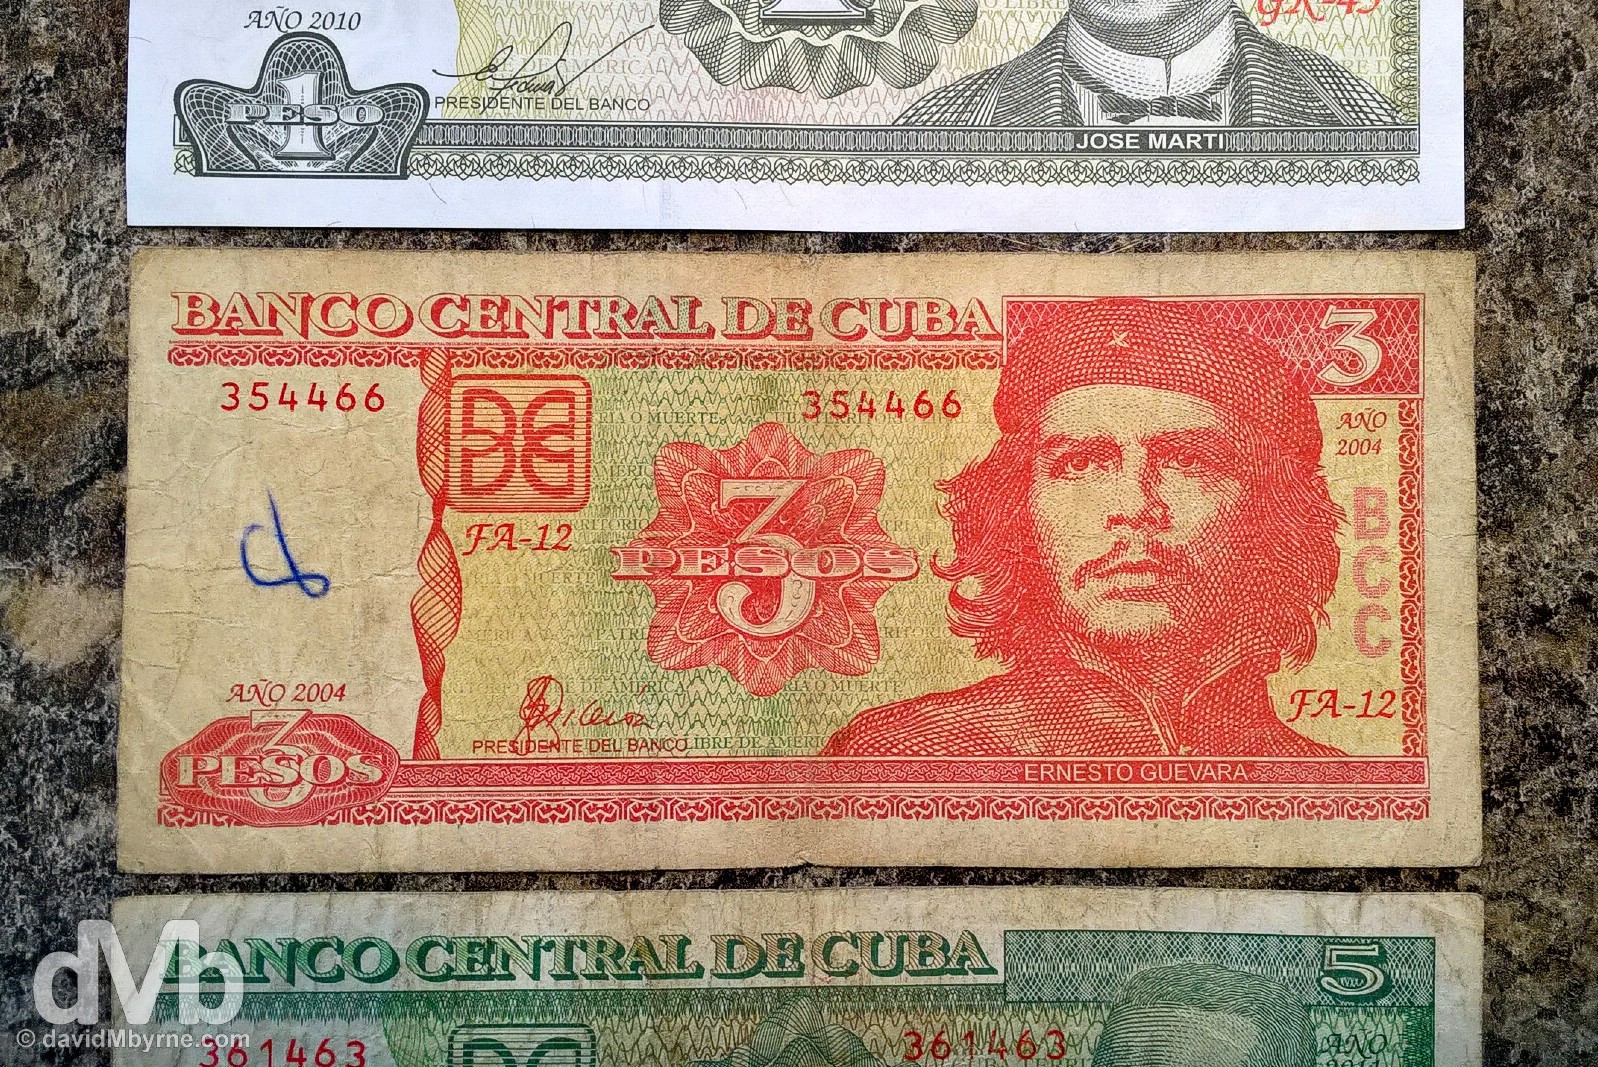 Cuban pesos, MN, moneda nacional. Barely worth the paper it's printed on.  